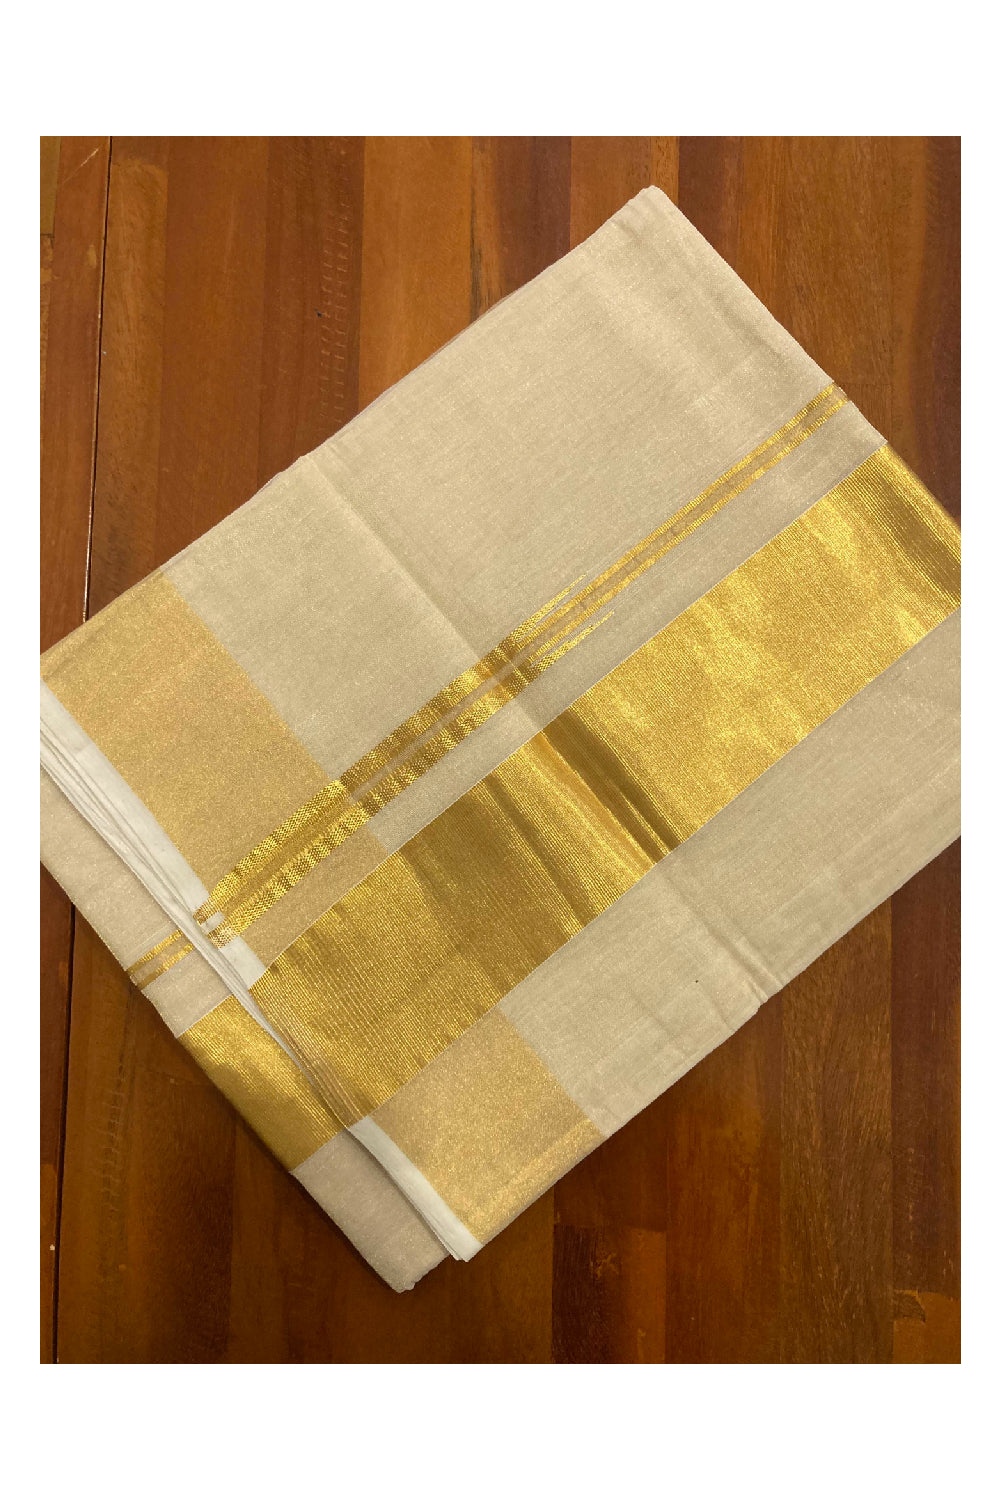 Southloom™ Premium Handloom Tissue Kasavu Saree with 3 inch Border